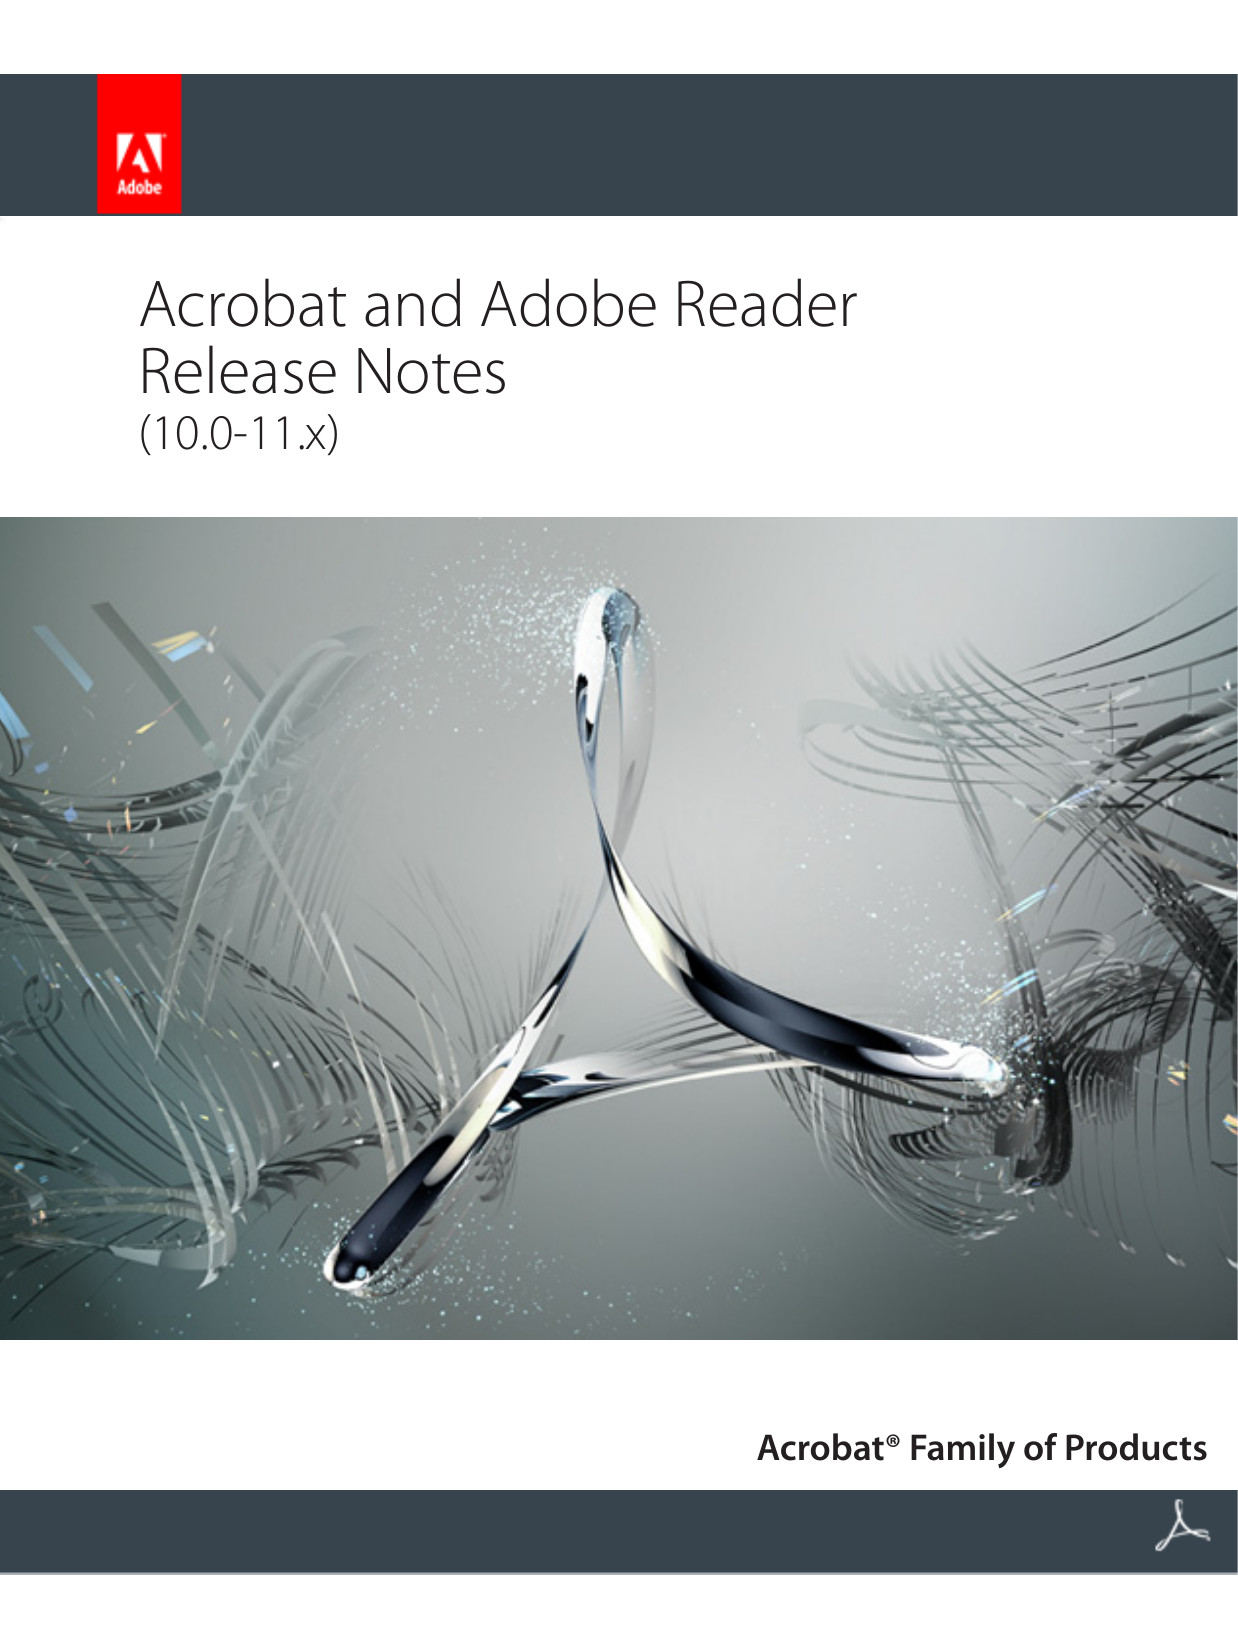 adobe reader for mac 10.7